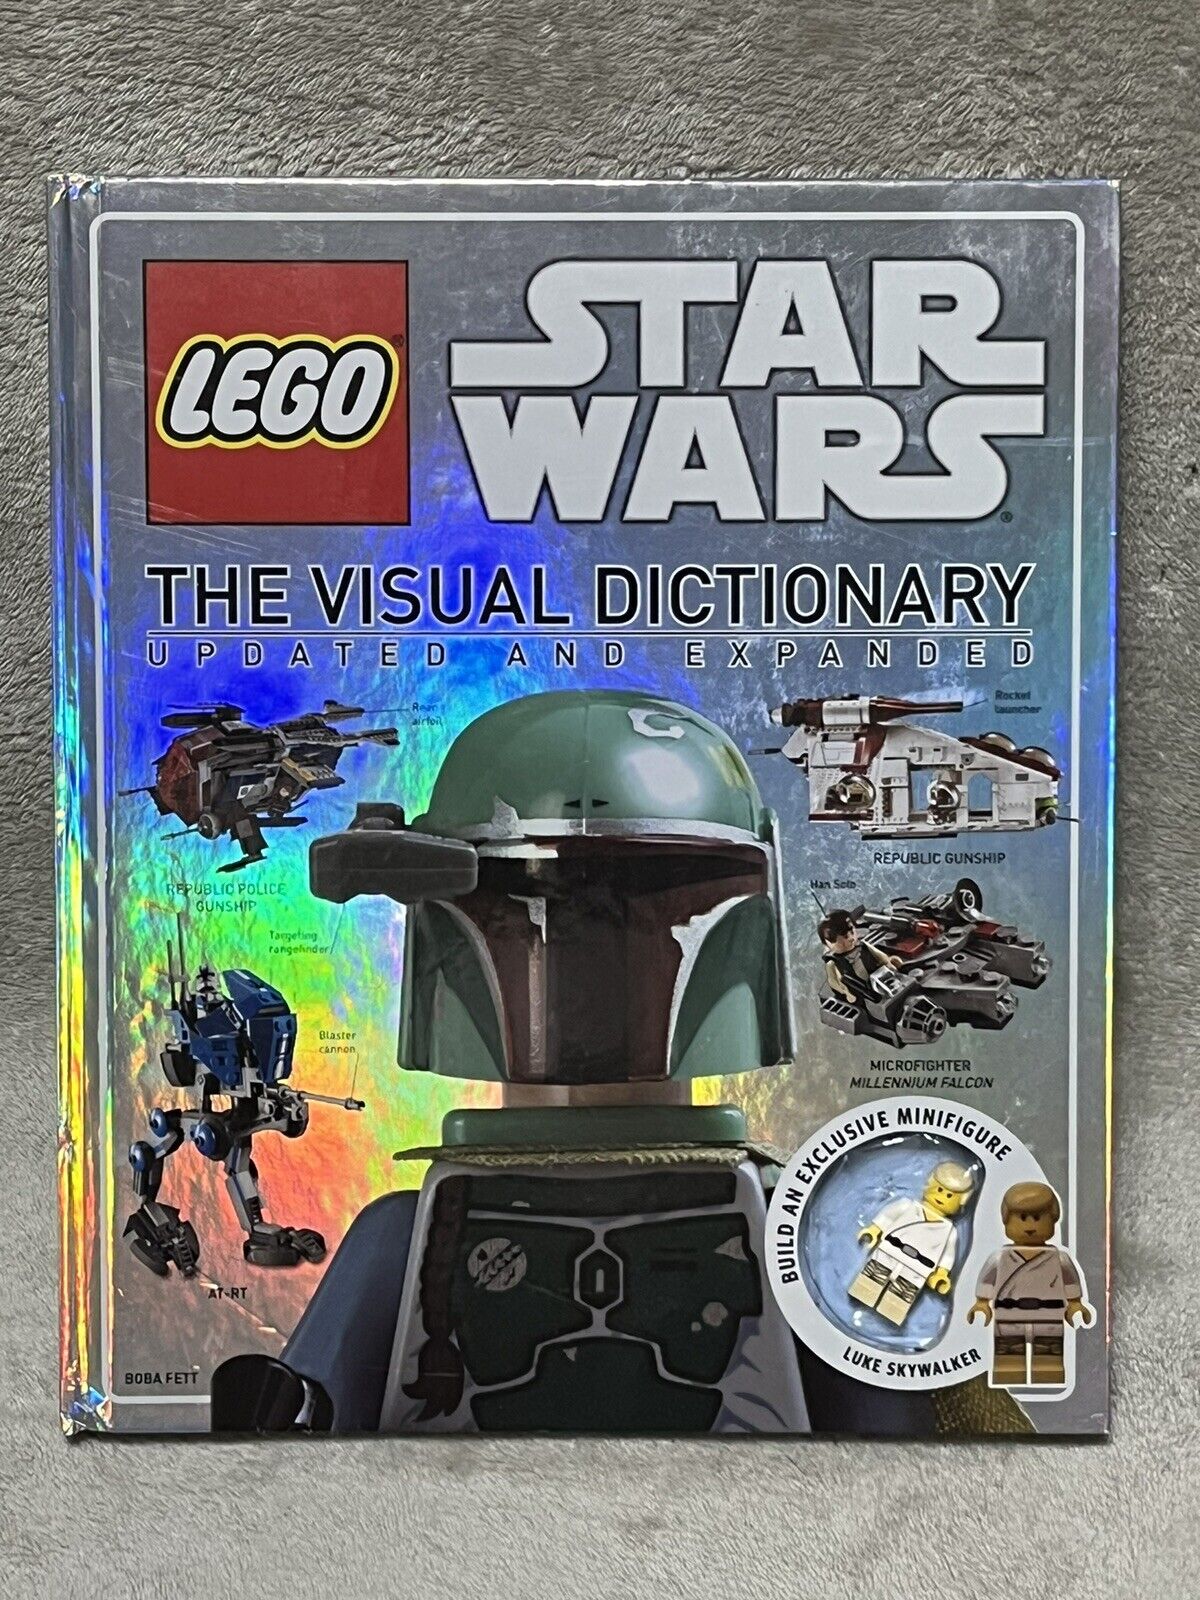 2014 Lego Star Wars Visual Dictionary Hardcover w/ Luke Skywalker Figure